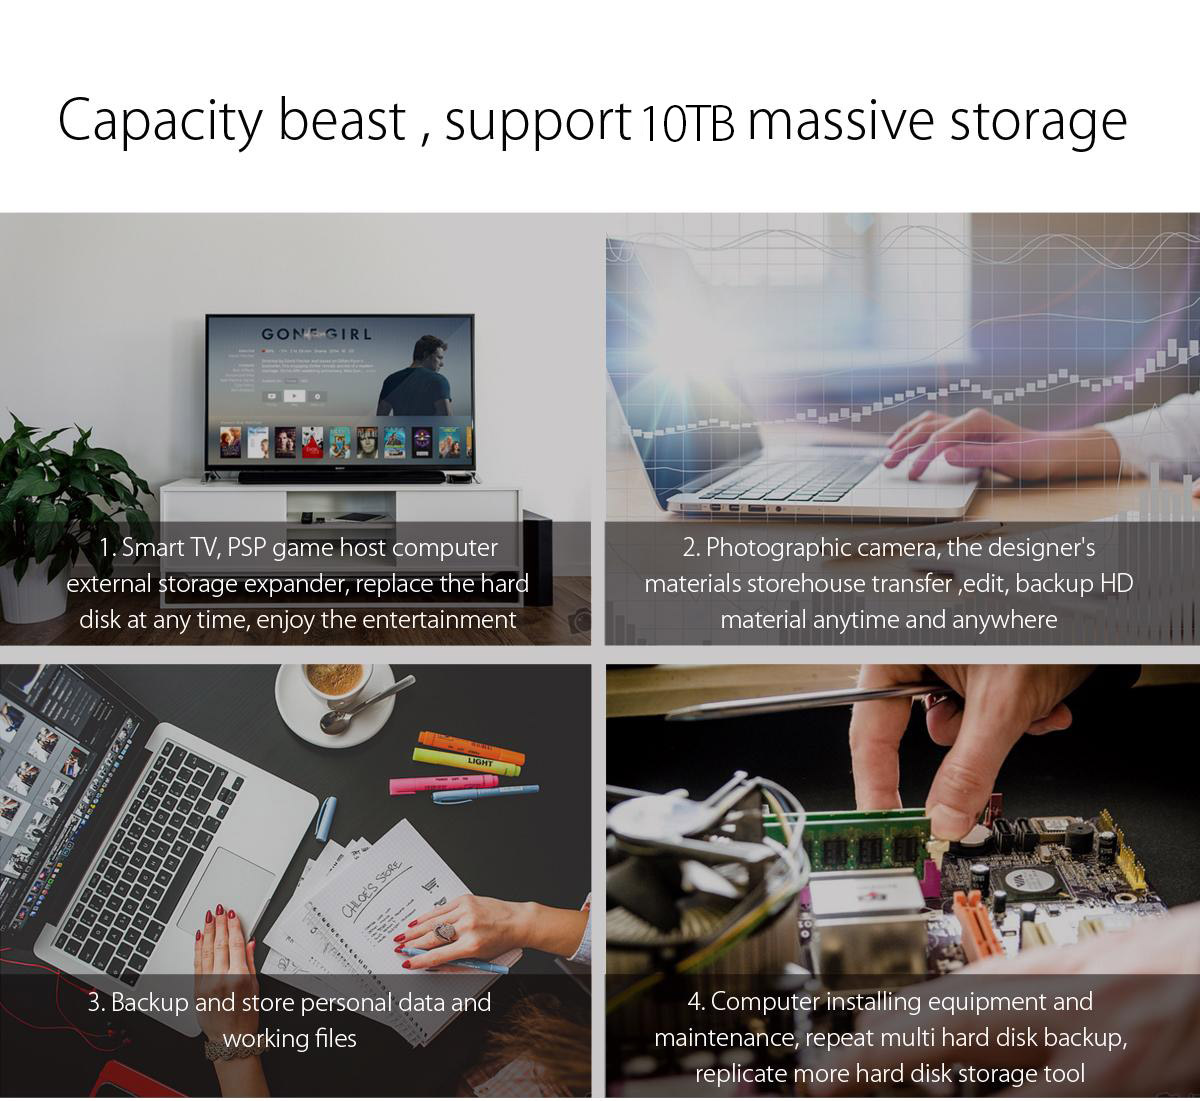 support 10TB massive storage